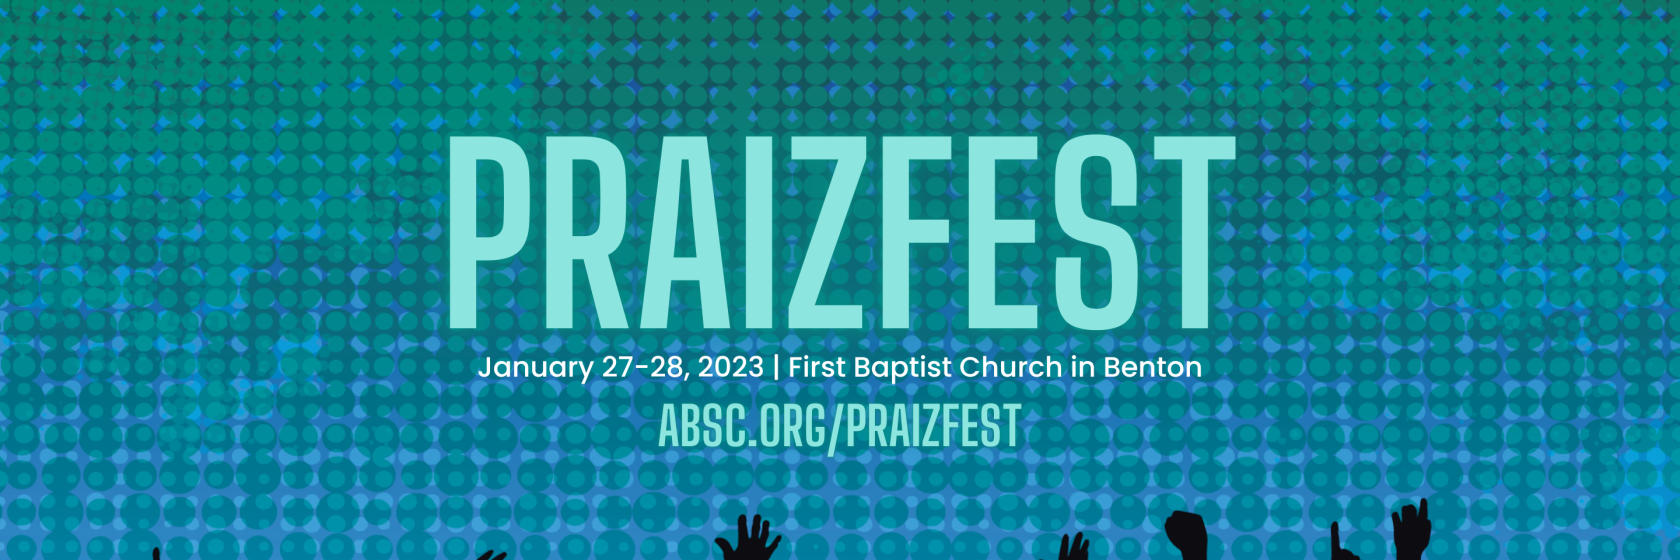 Registration is open now for Praizfest 2023!